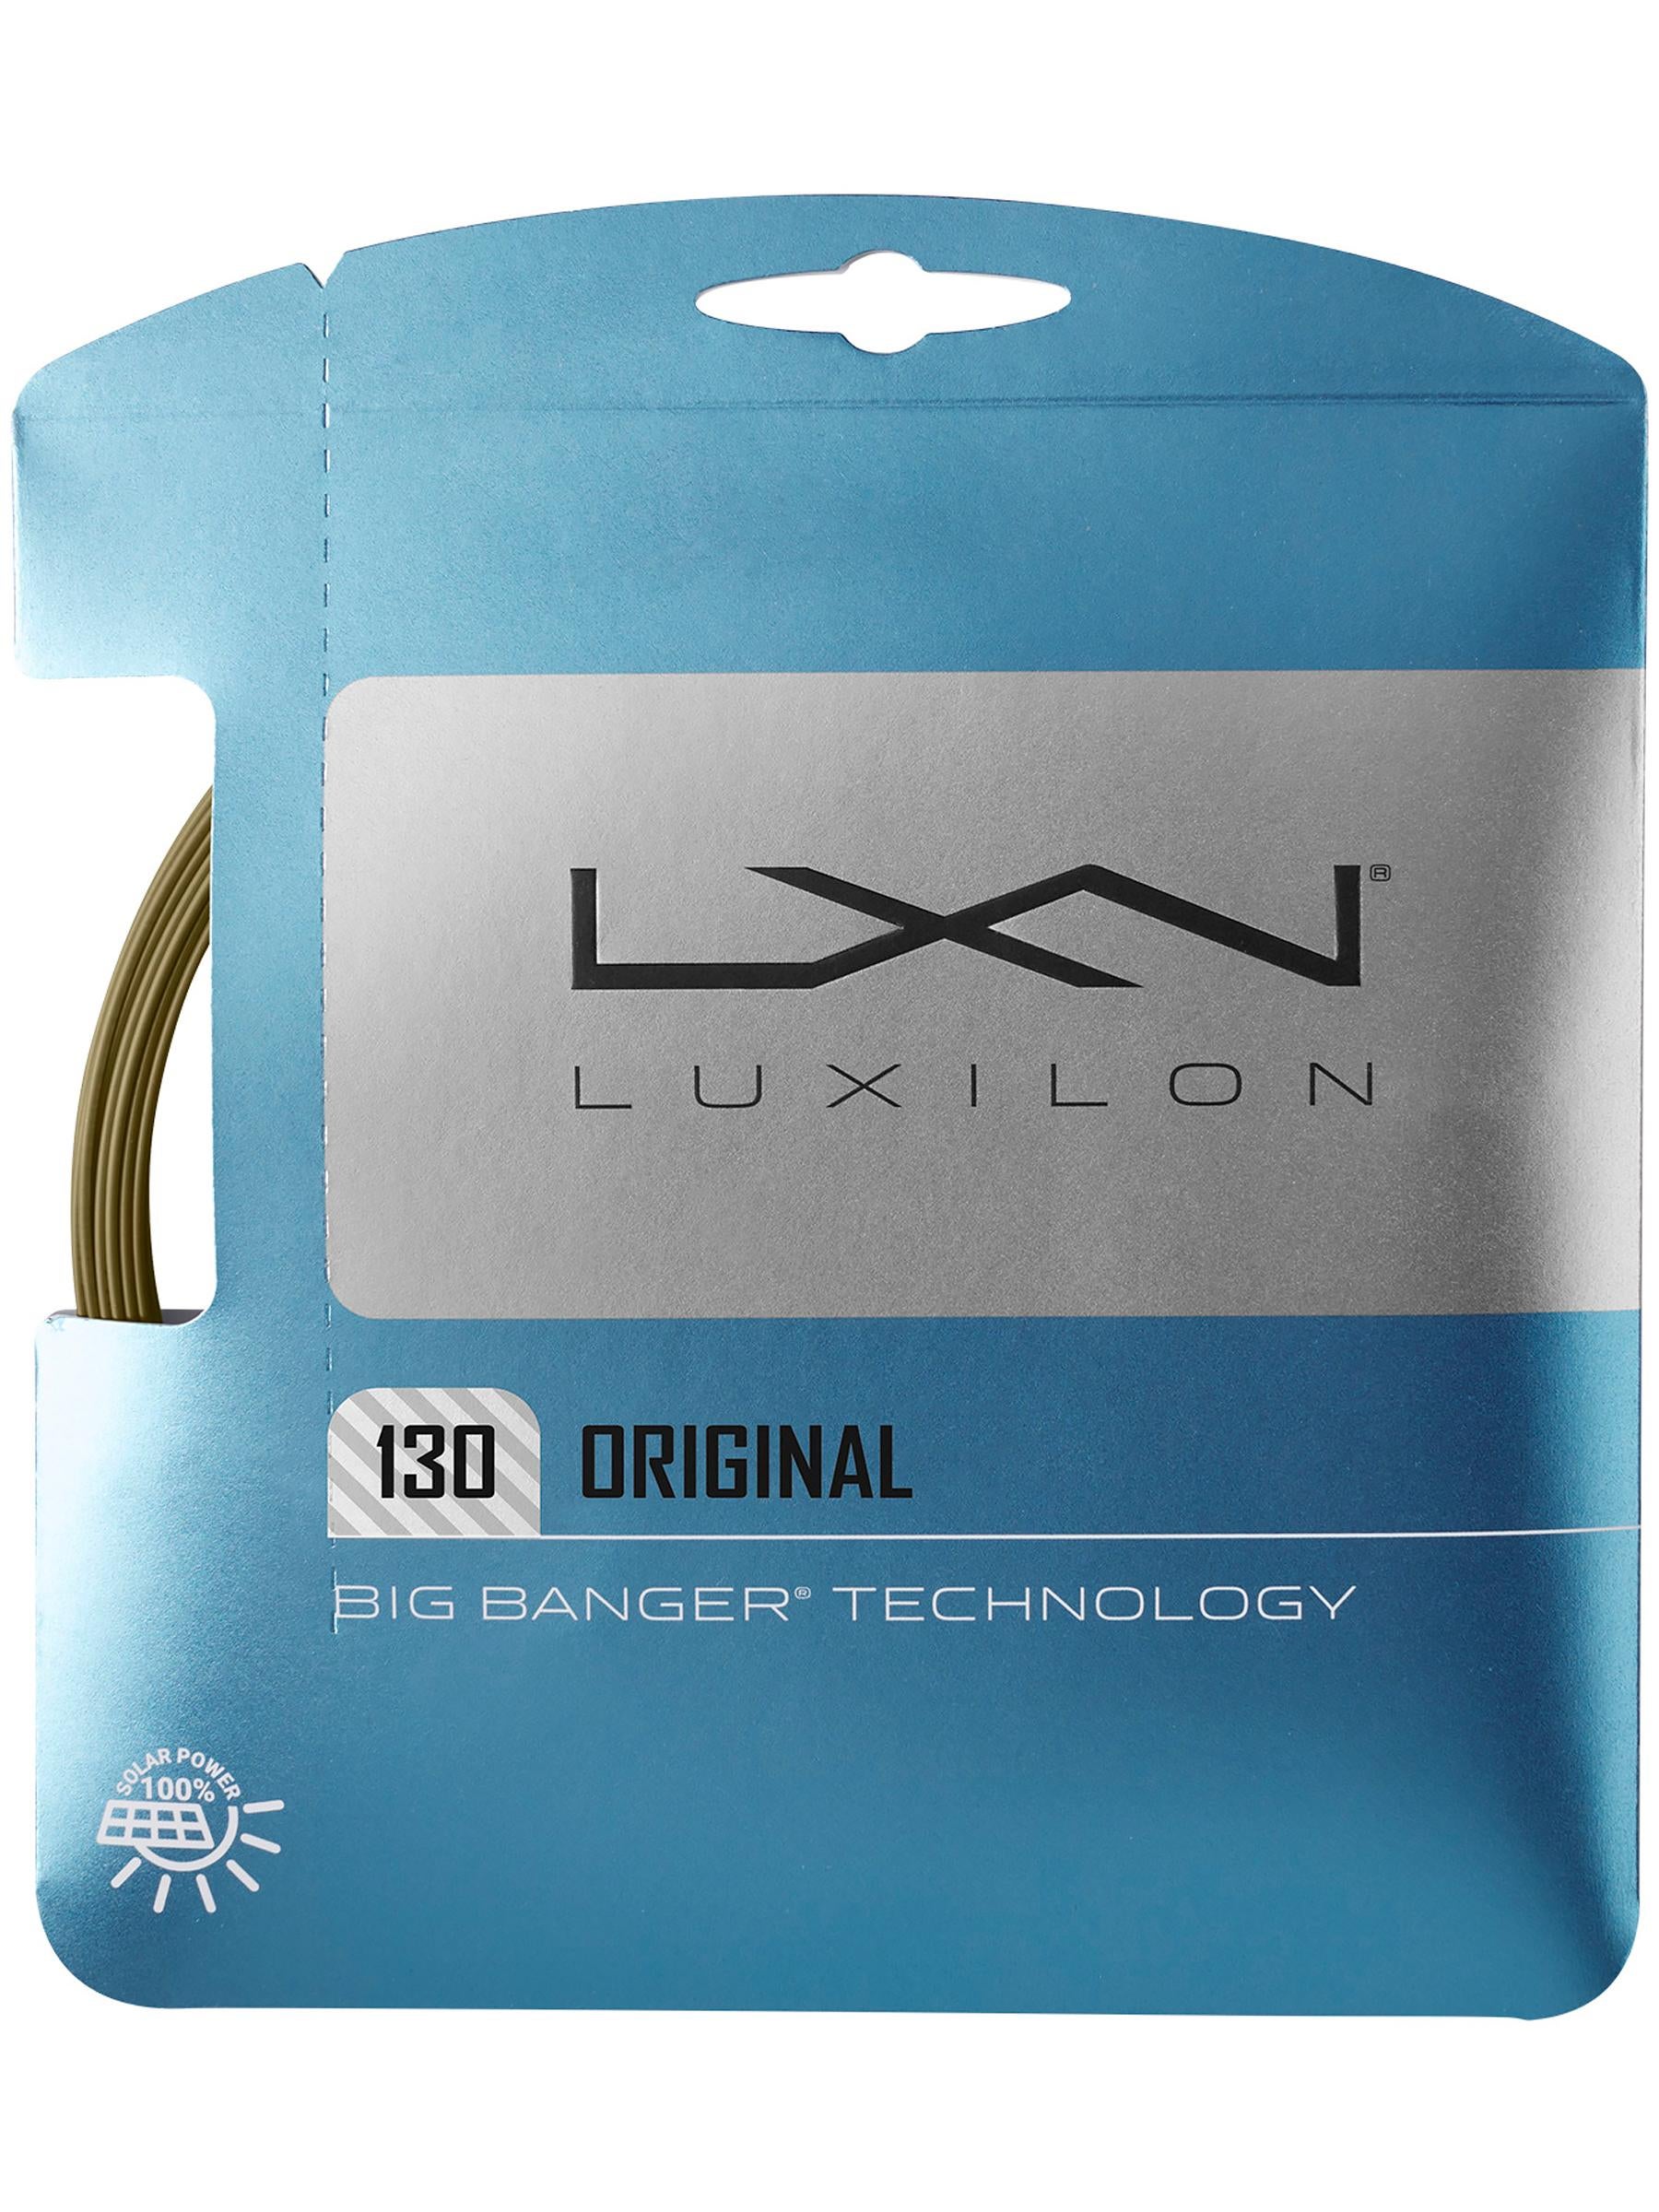 Luxilon Big Banger Original 130 1,50€/Lfm. 